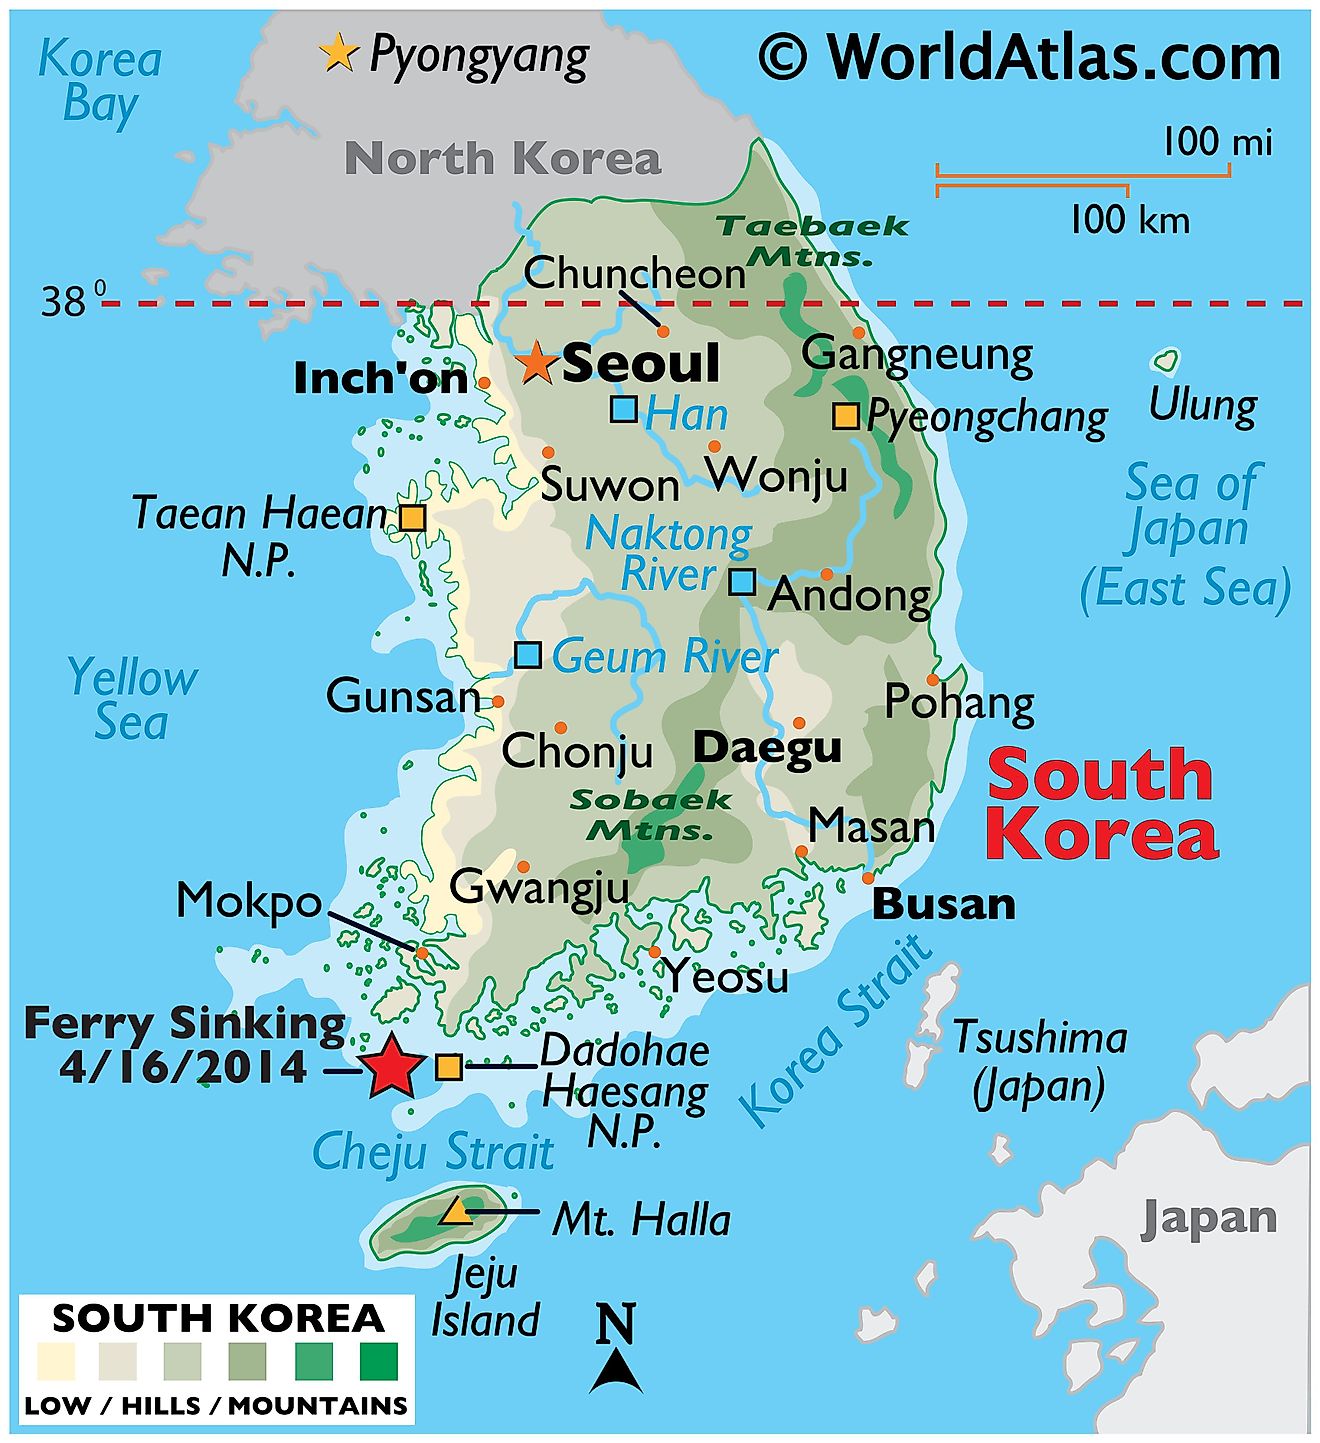 South Korea In The Map South Korea Maps & Facts - World Atlas